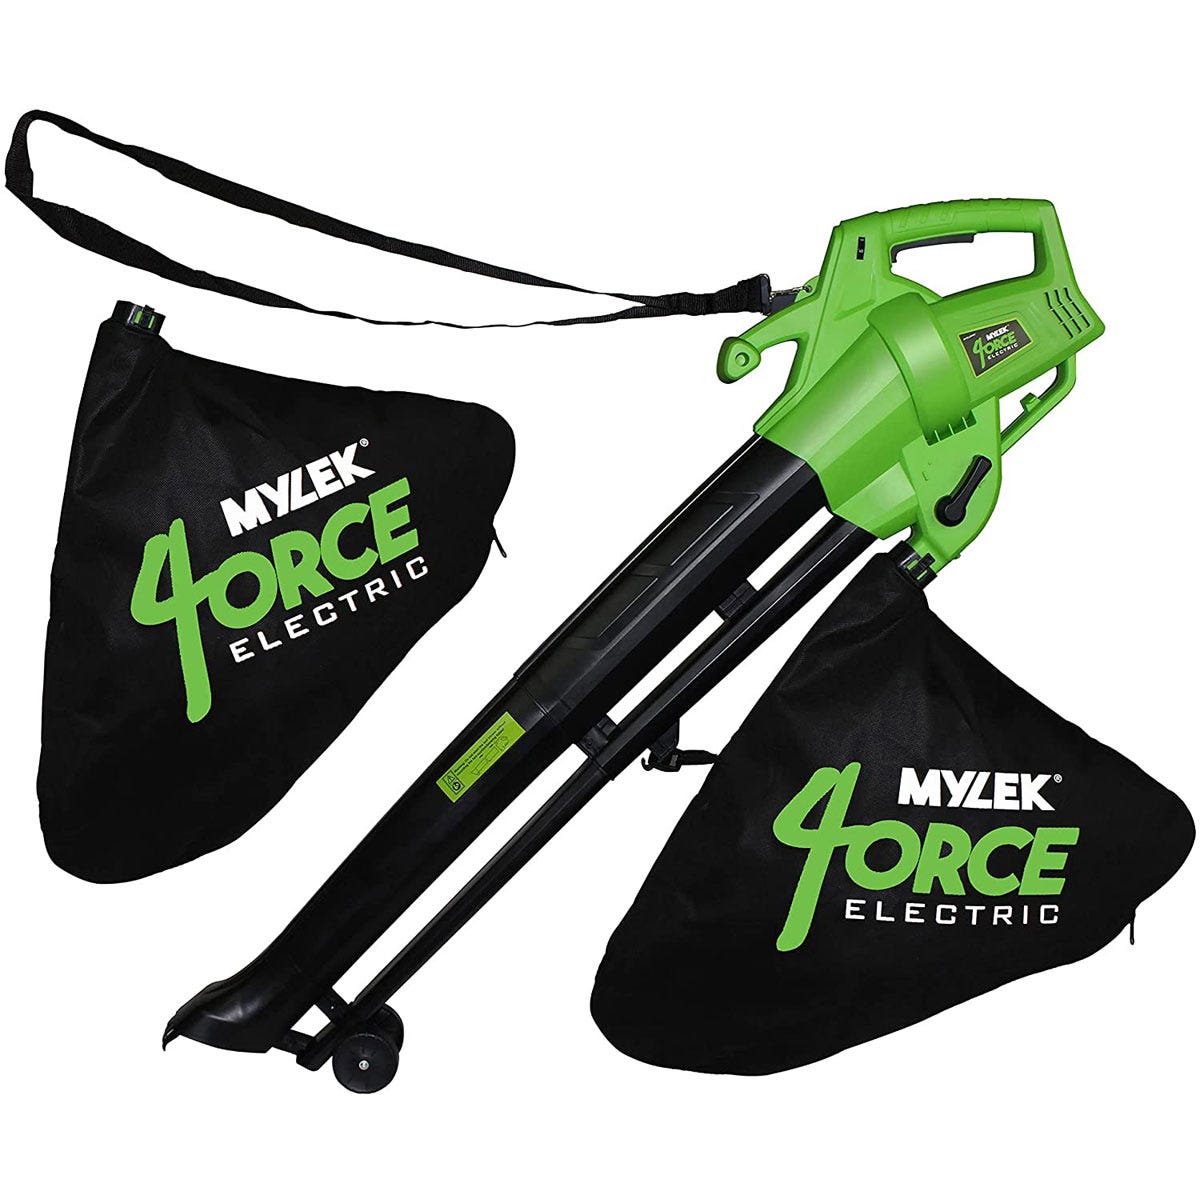 Mylek 3000W Garden Leaf Blower And Vacuum - Green & Black